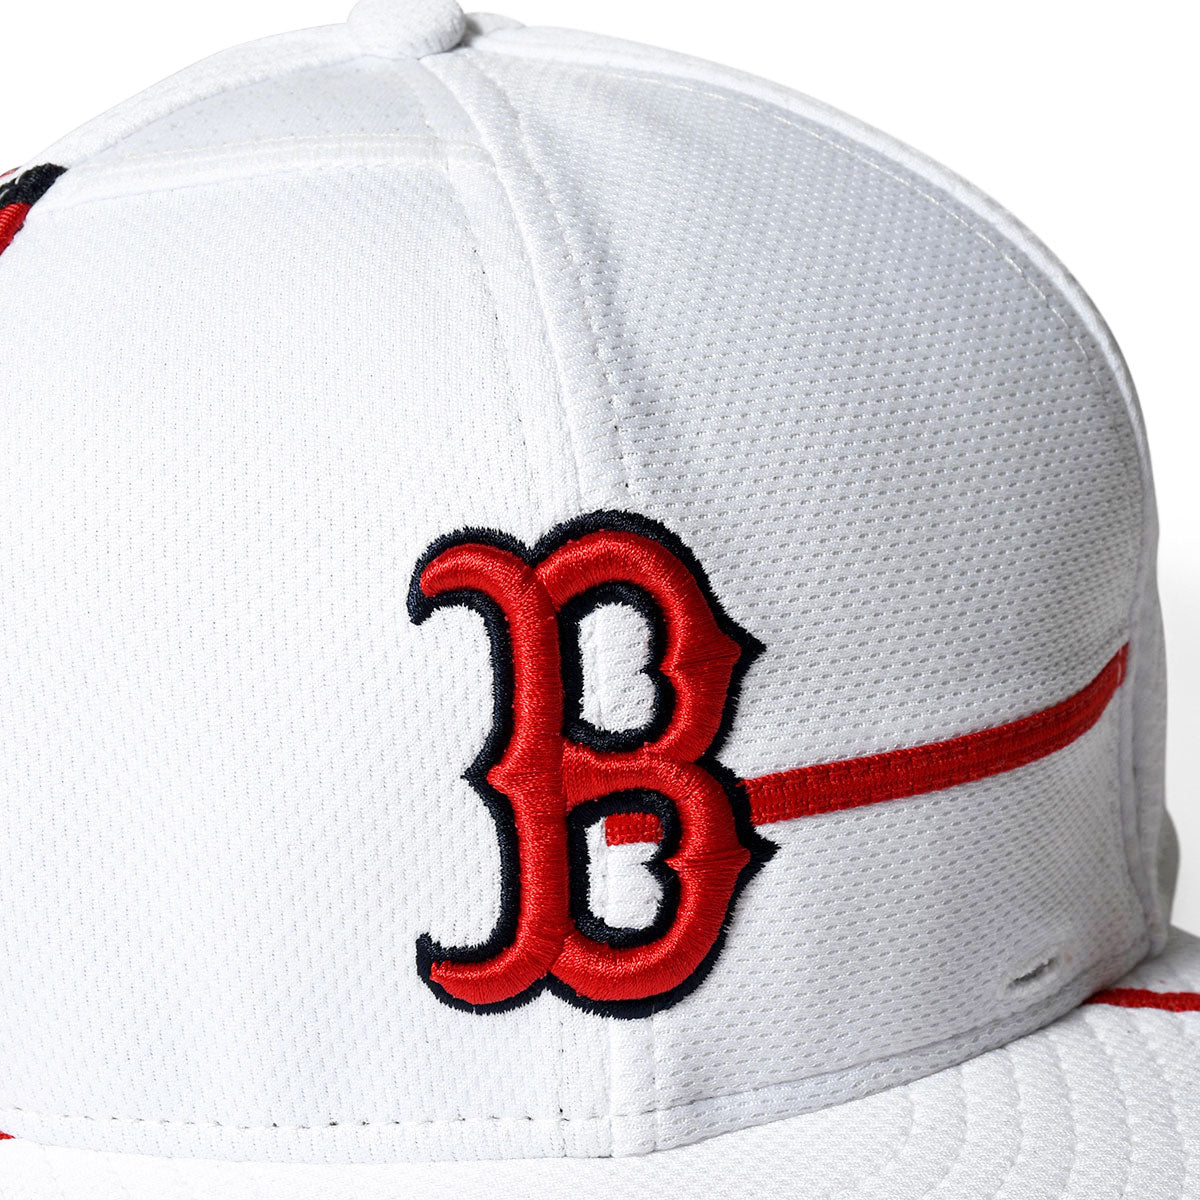 NEW ERA Boston Red Sox - 9FIFTY AUTHENTIC JERSEY BETTS V3 KIT S No.22/90 [11834991]